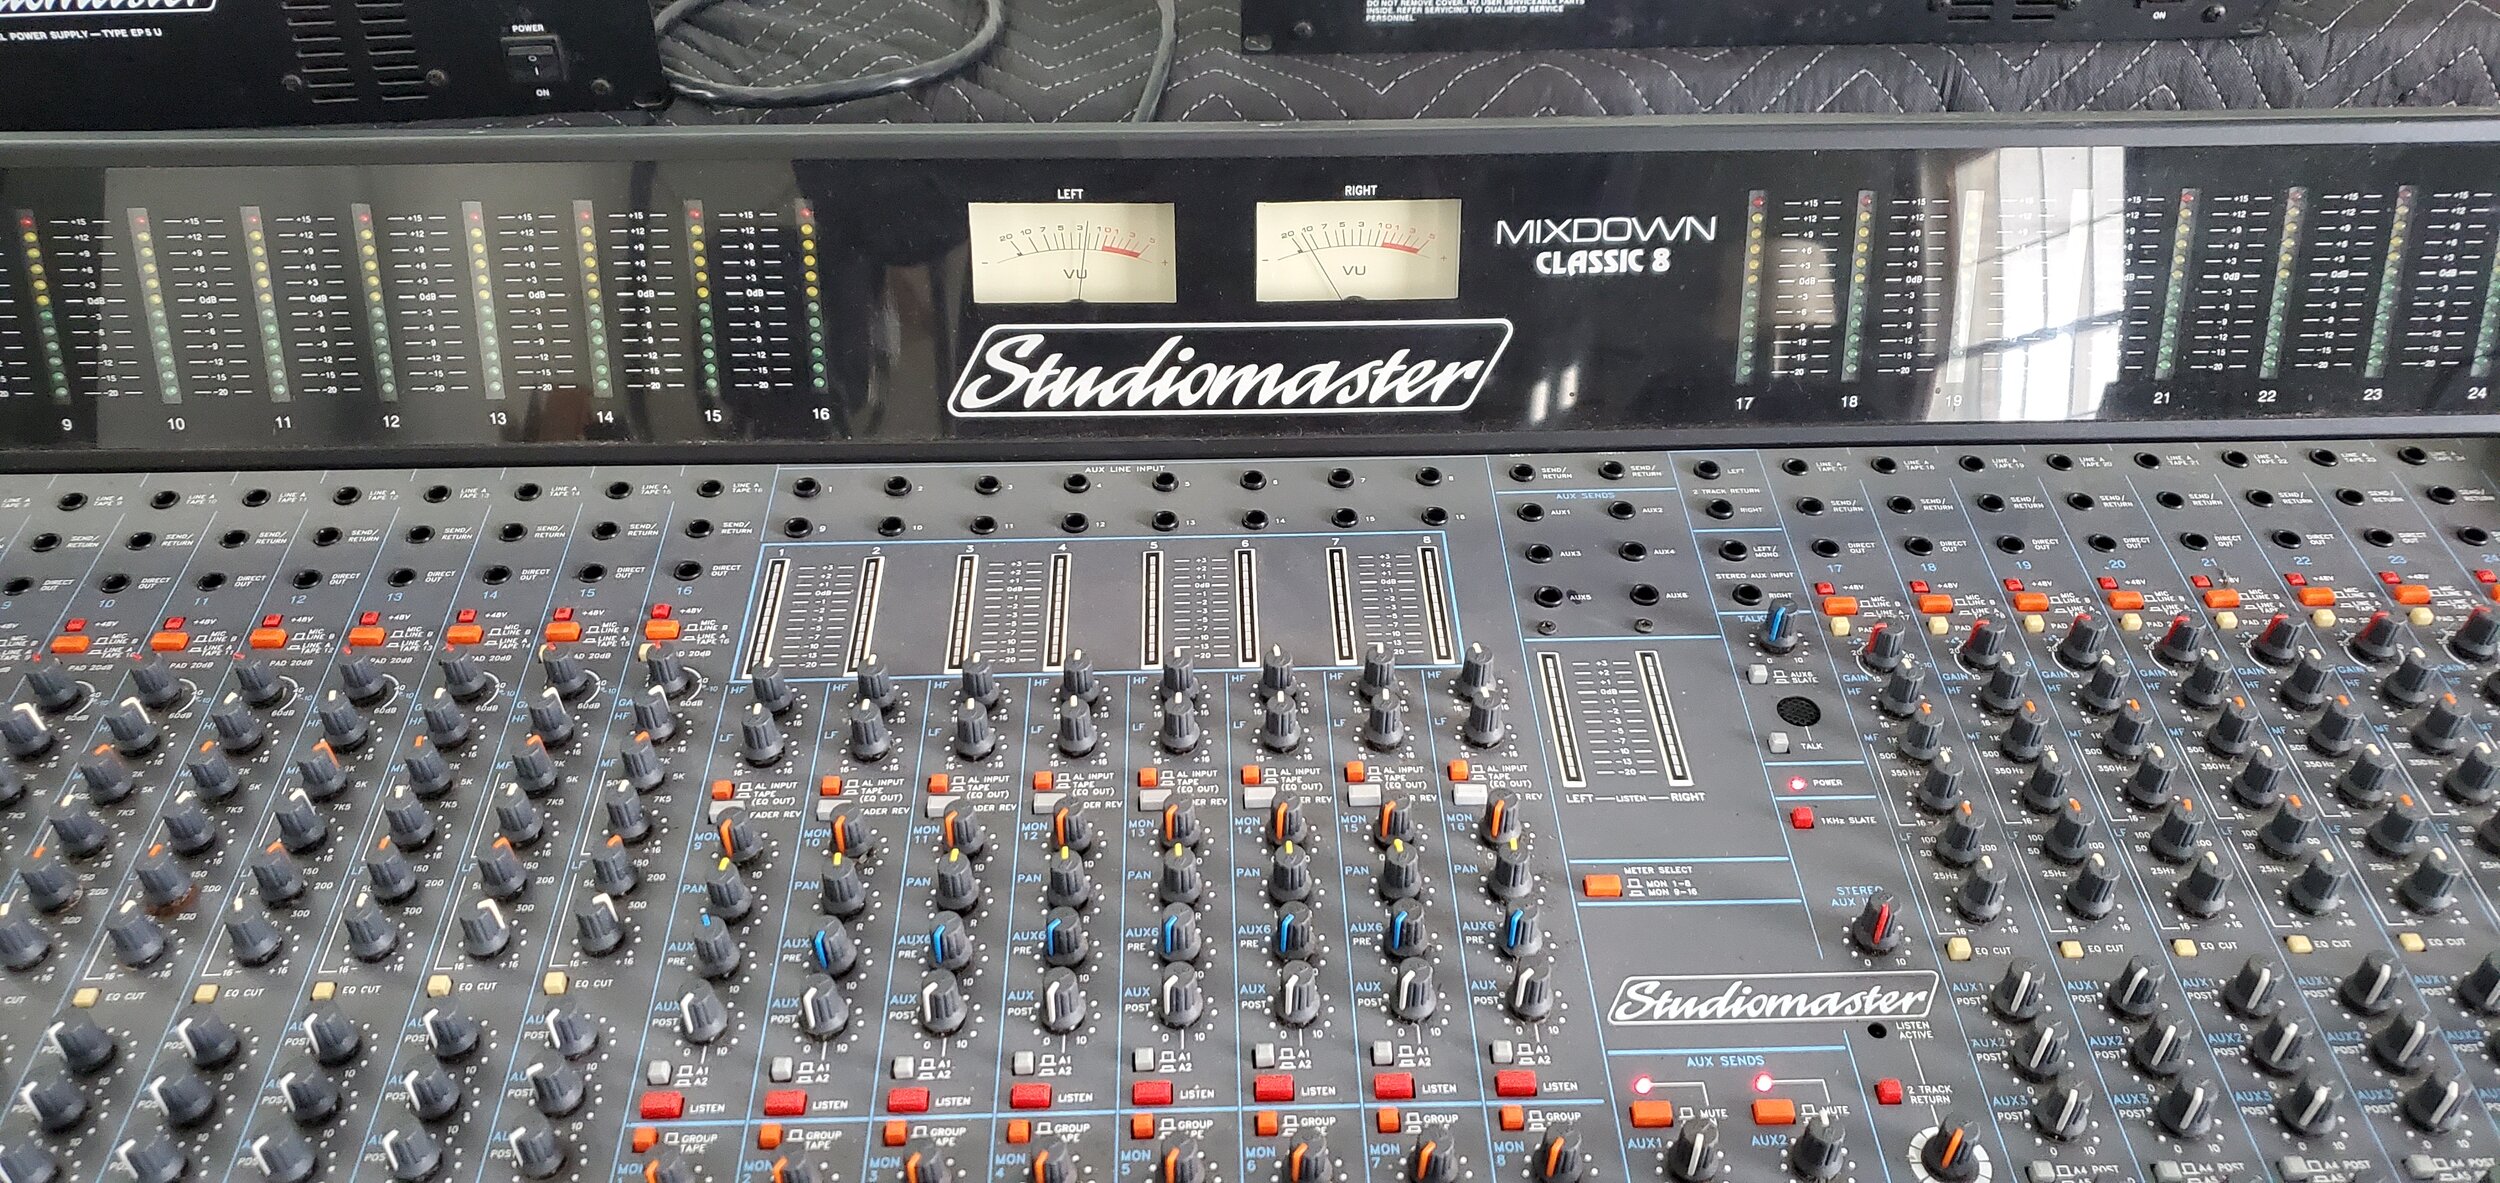 Studio Master Mix Down Classic 8 — Musicians